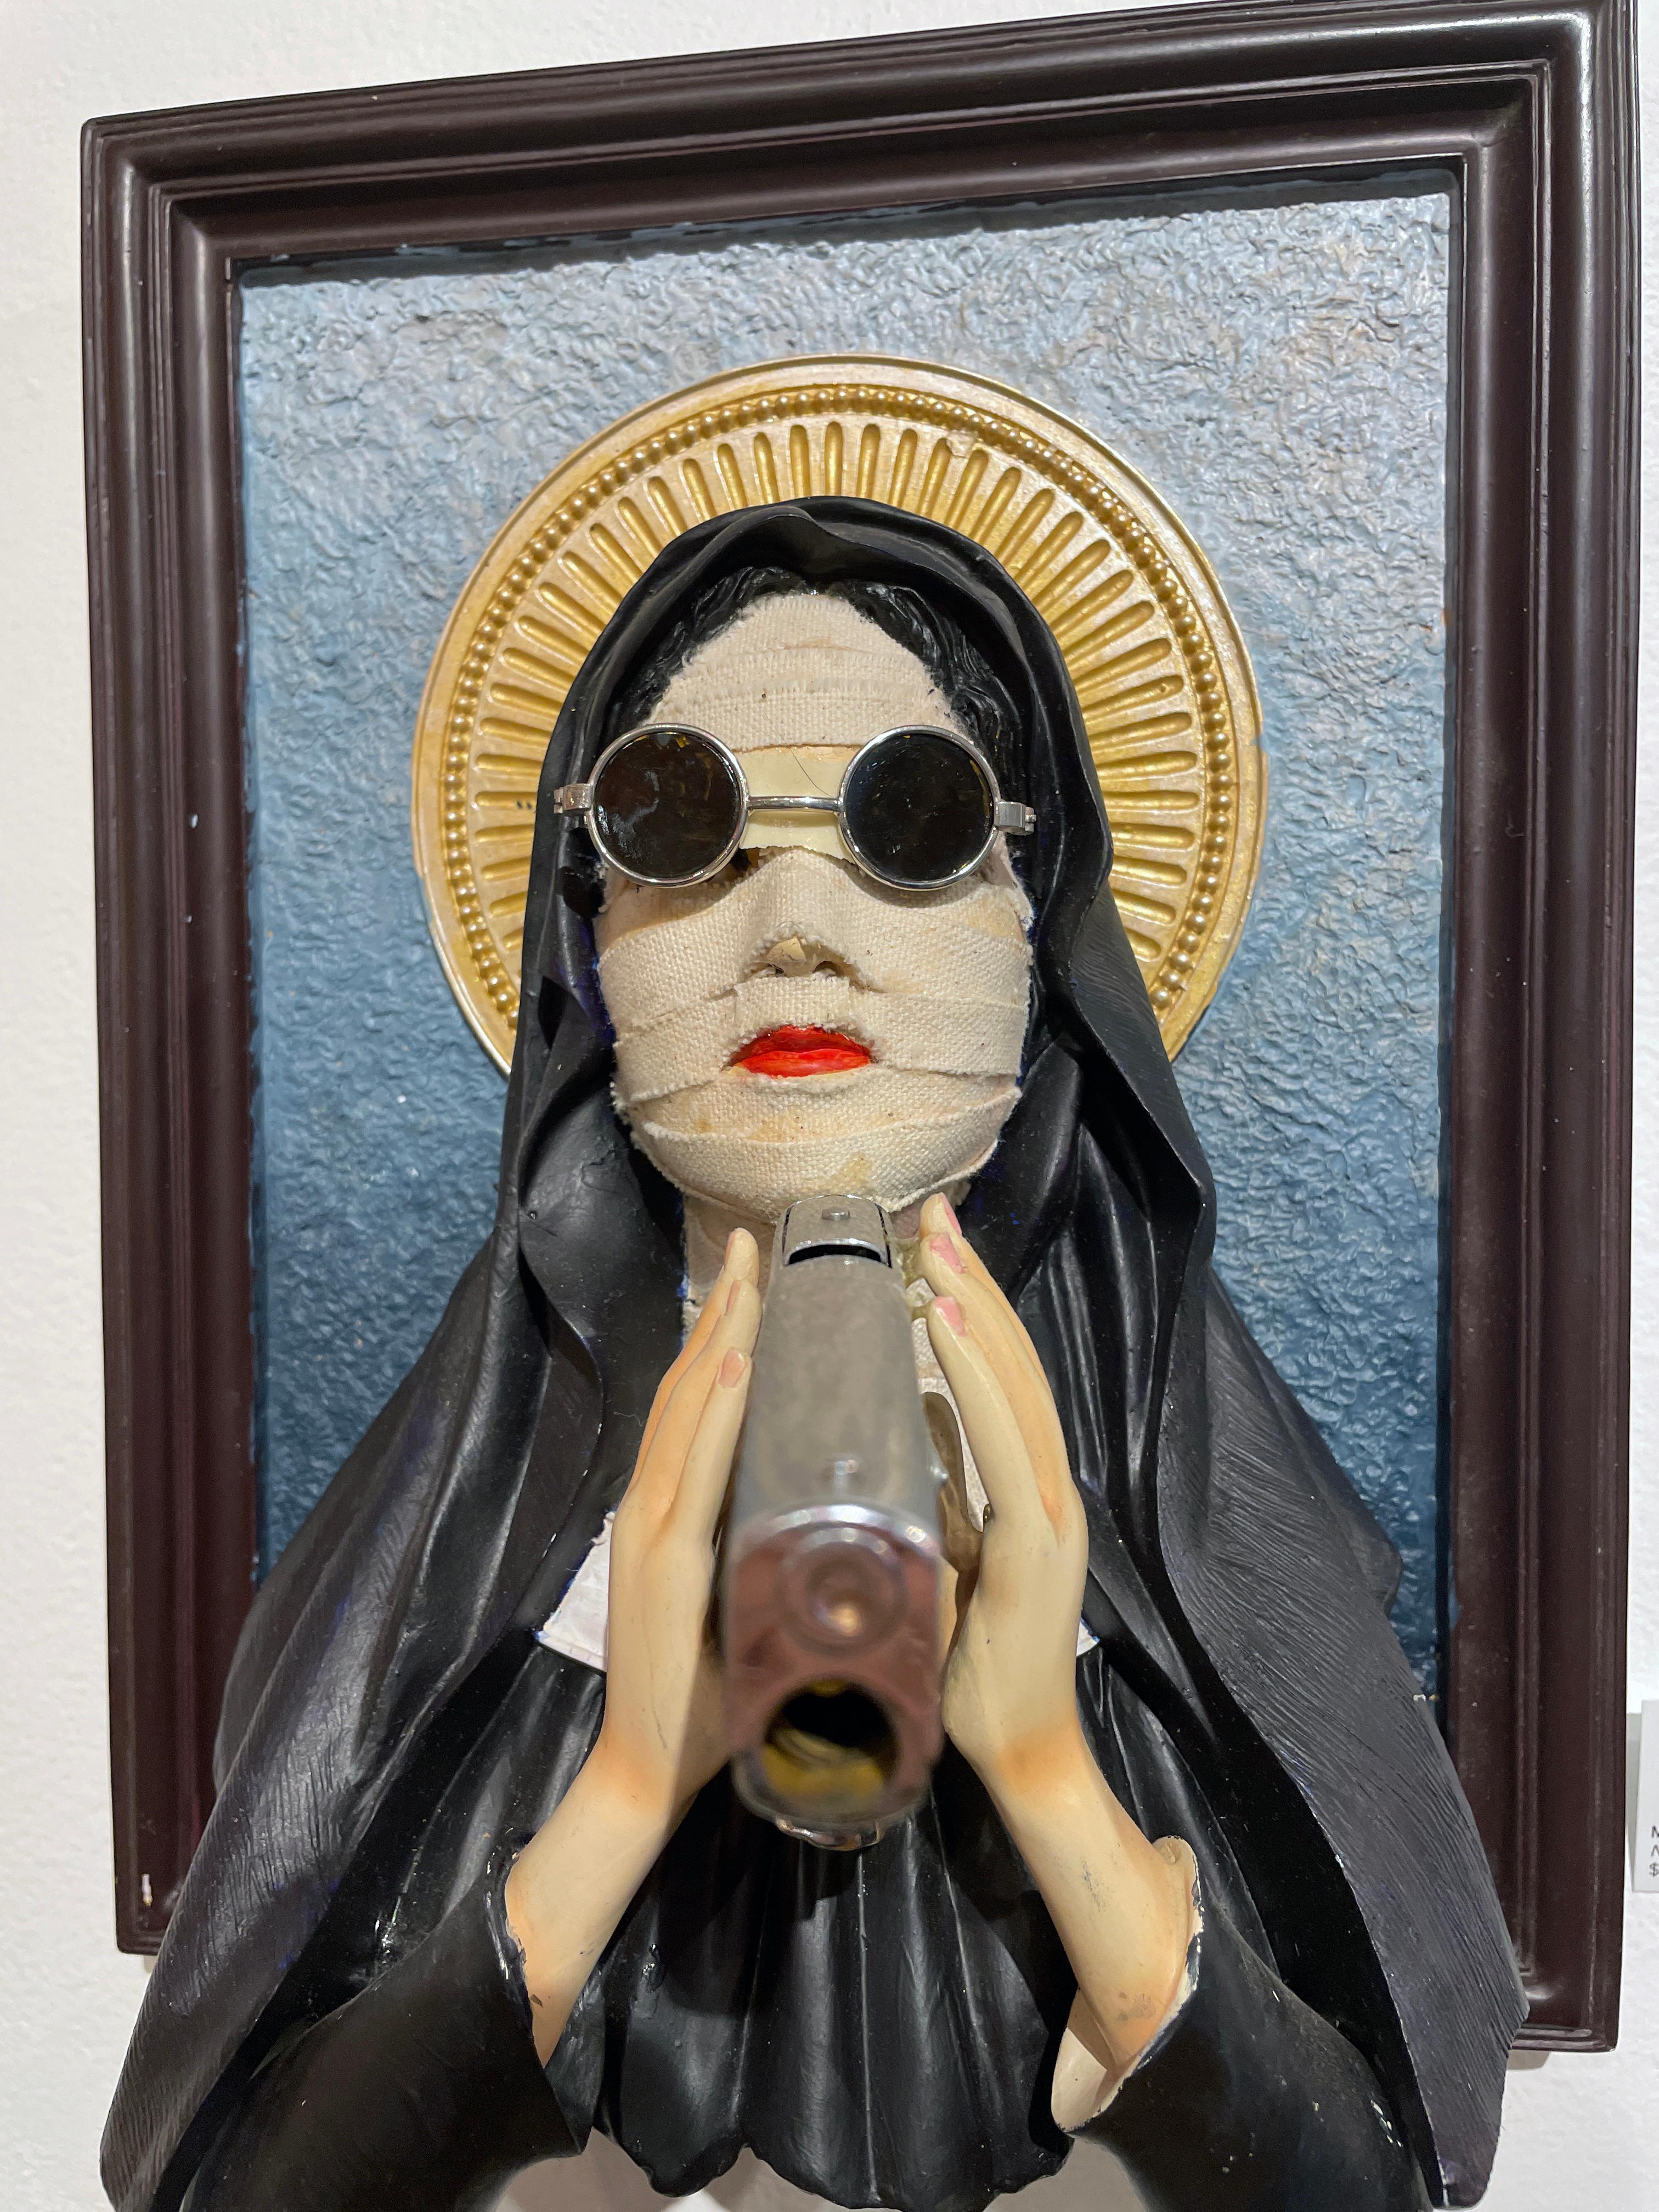 Nun with a Gun - Three Dimensional Sculptural Wall Piece - Contemporary Mixed Media Art by Marcos Raya